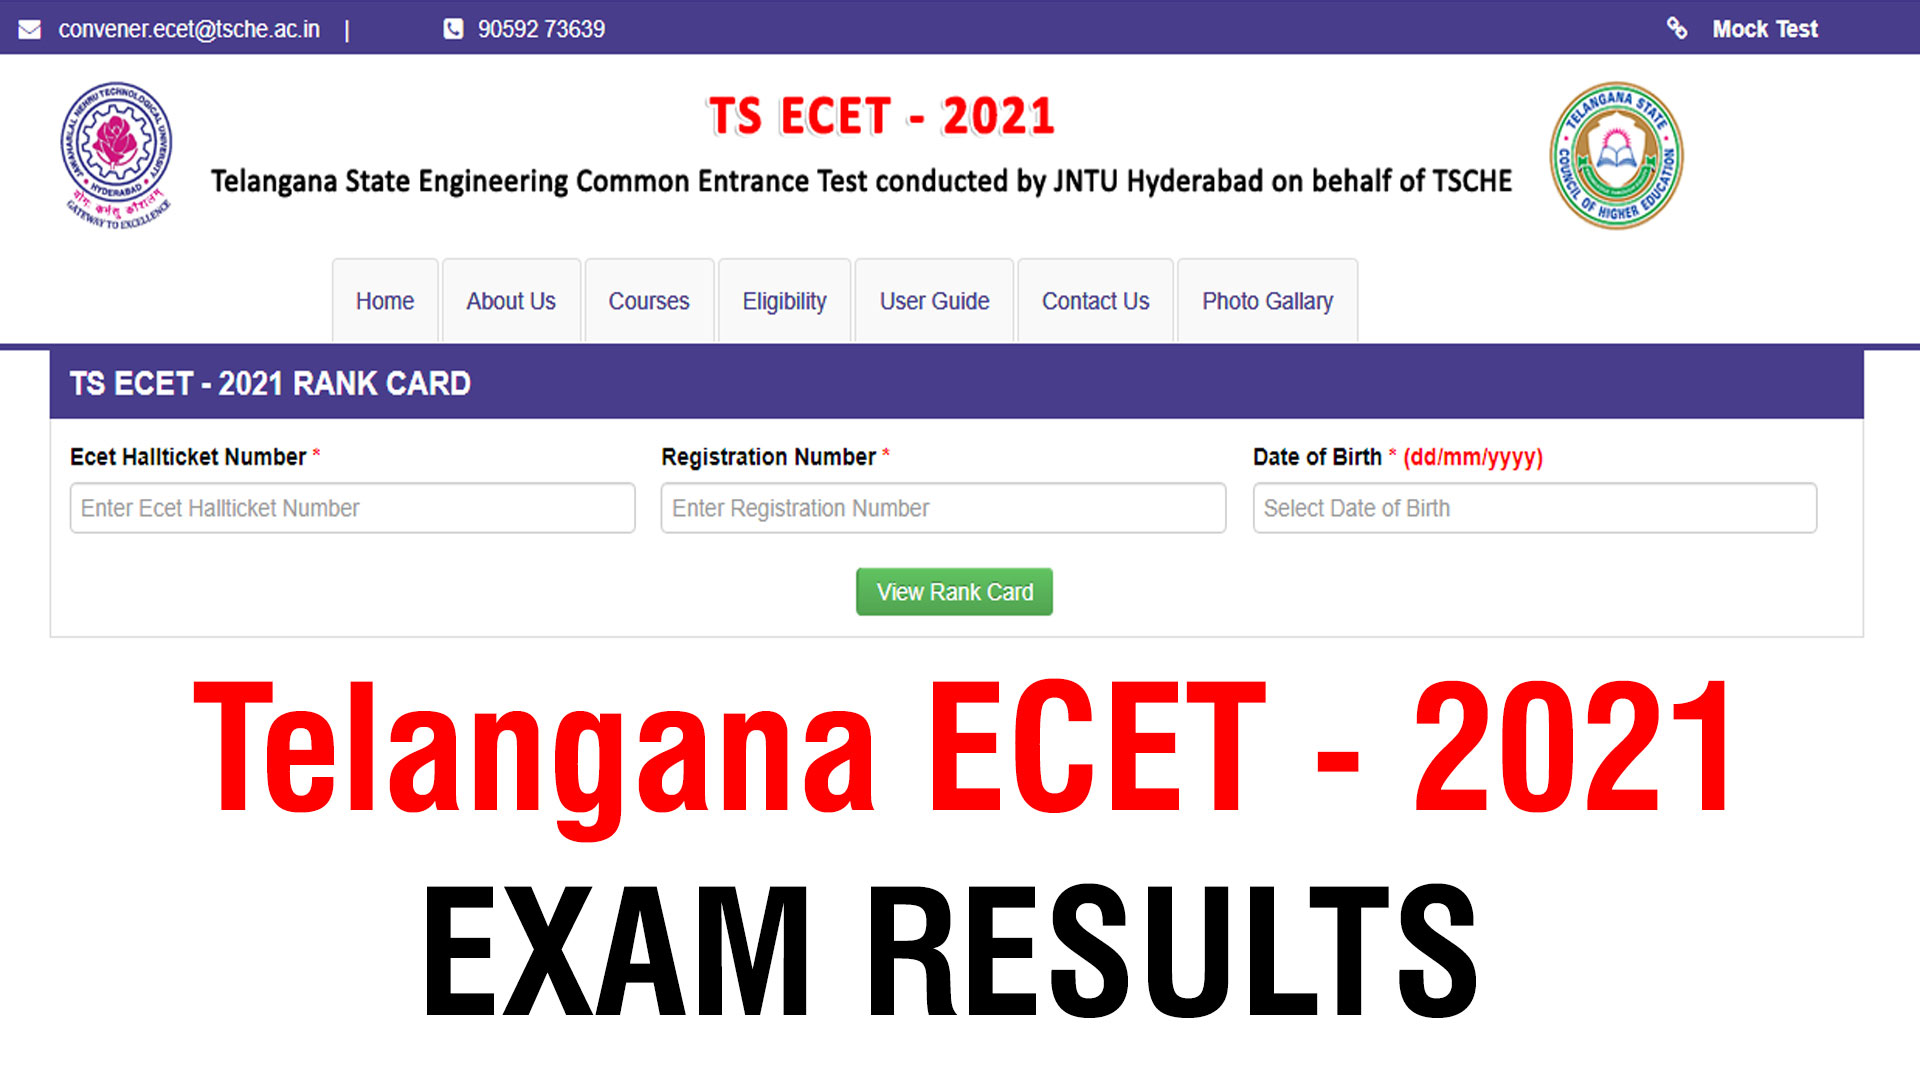 Telangana ECET 2021 Exam Results online